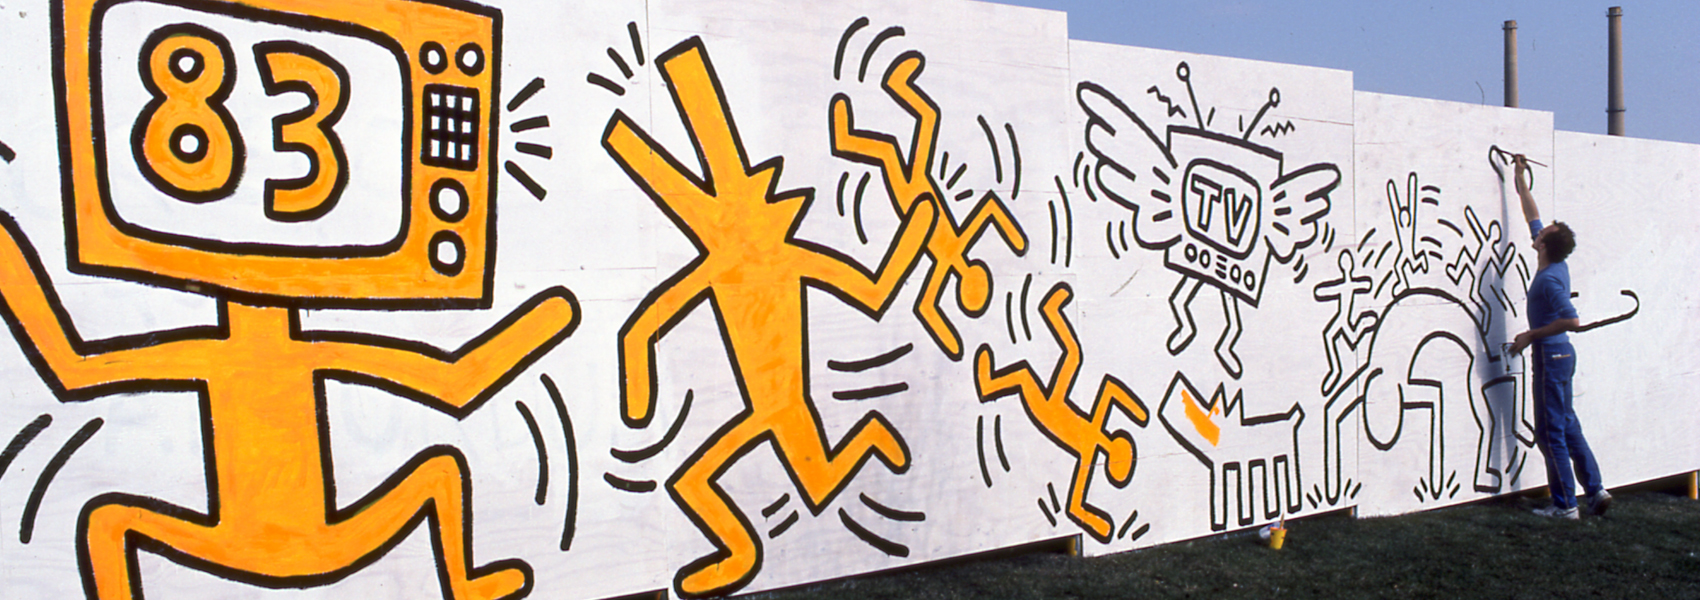 Кит харинг h m. Кит Харинг граффити. Кит Харинг художник стрит арт. Кейт Харинг художник. Кит Харинг собака.